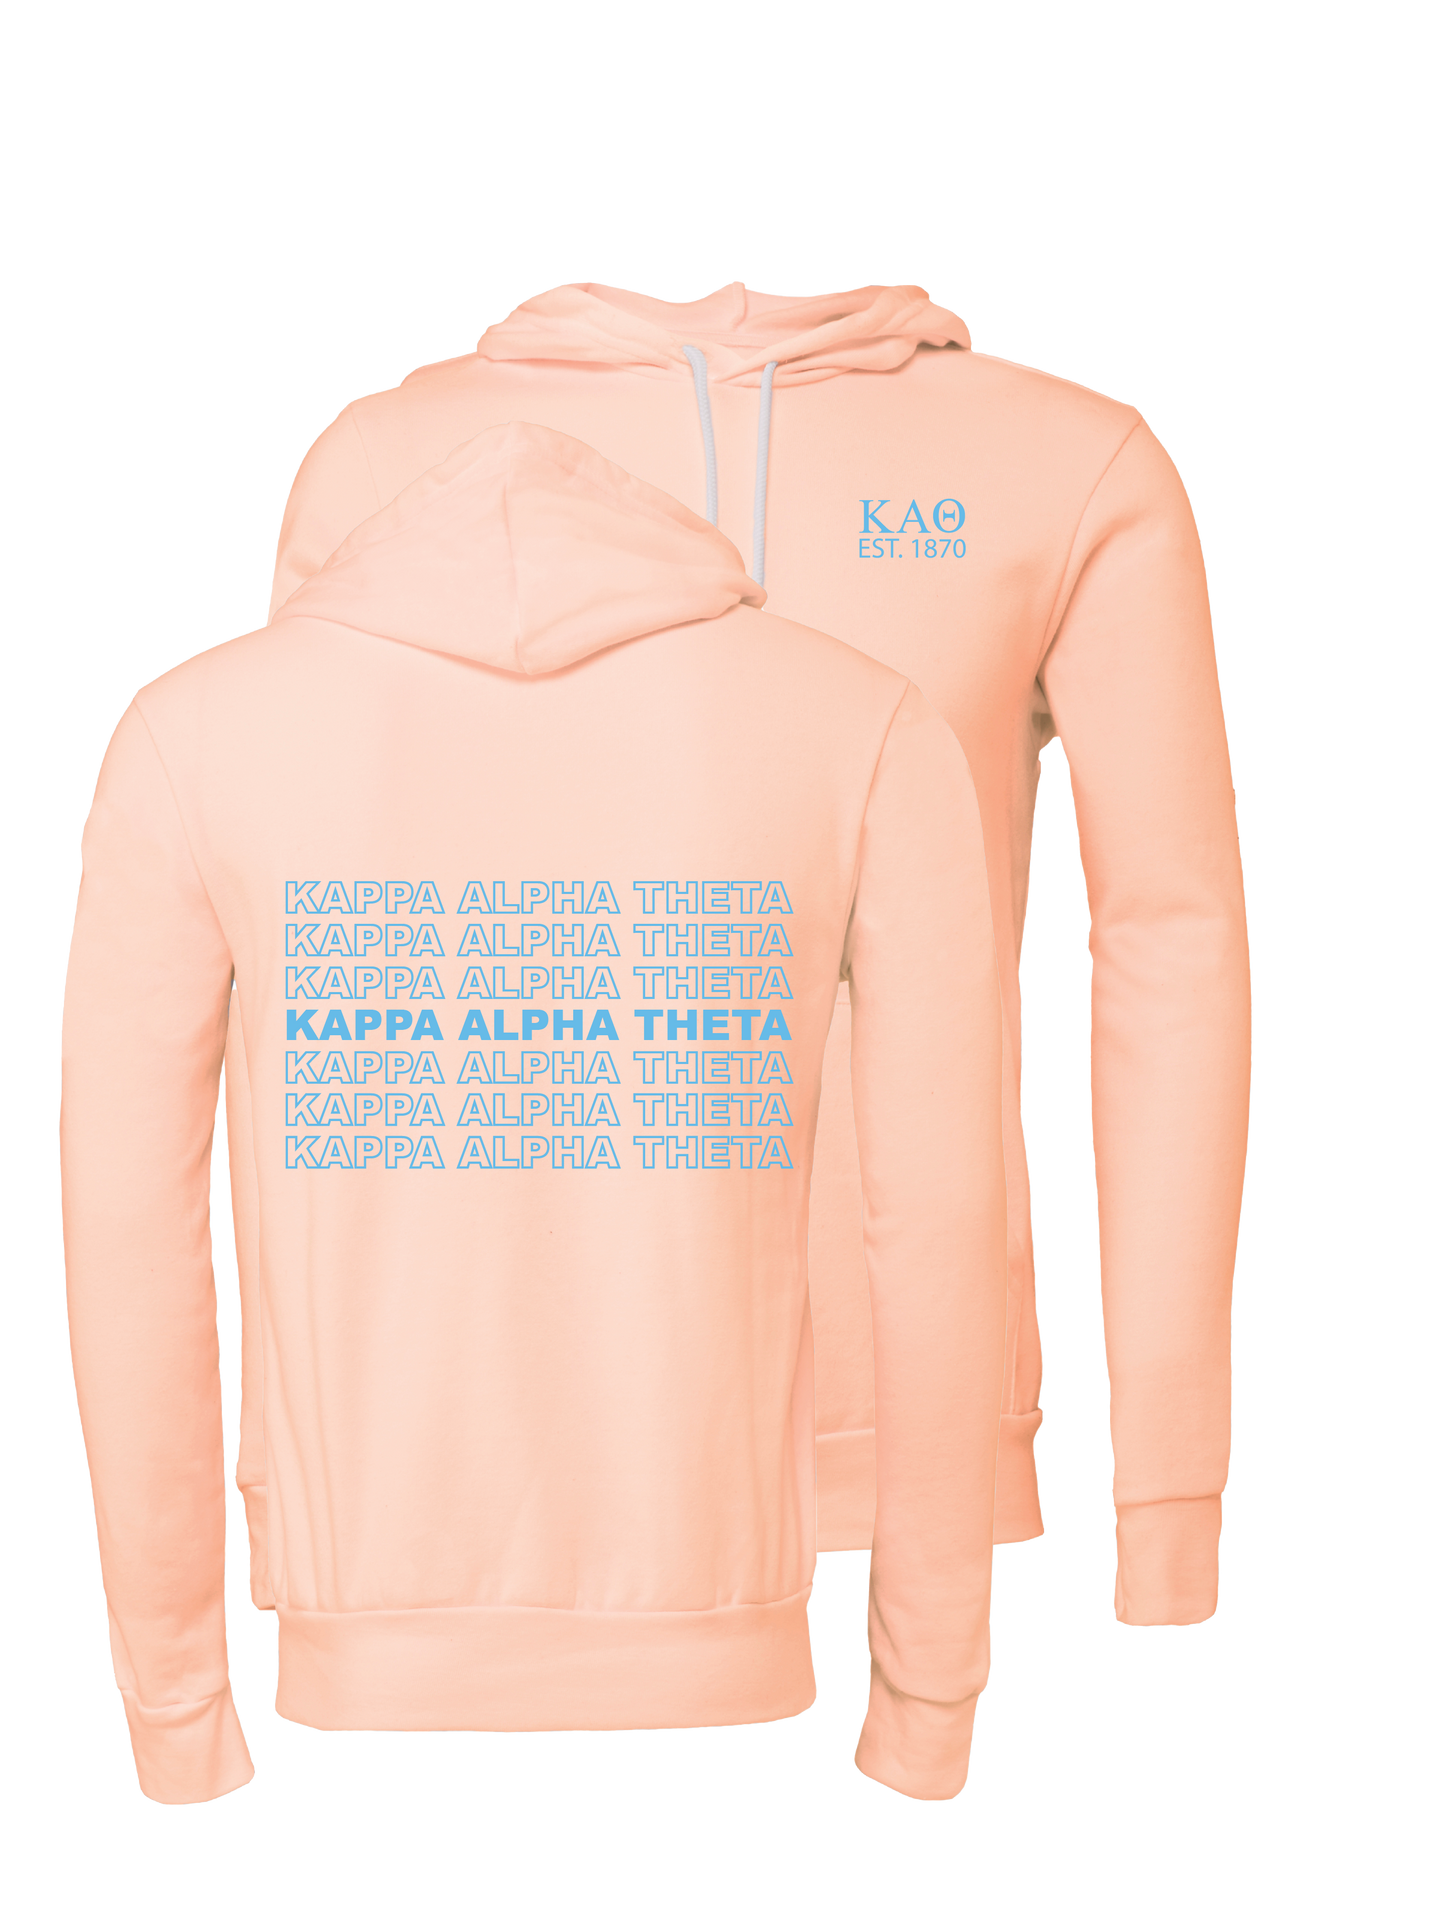 Kappa Alpha Theta Repeating Name Hooded Sweatshirts